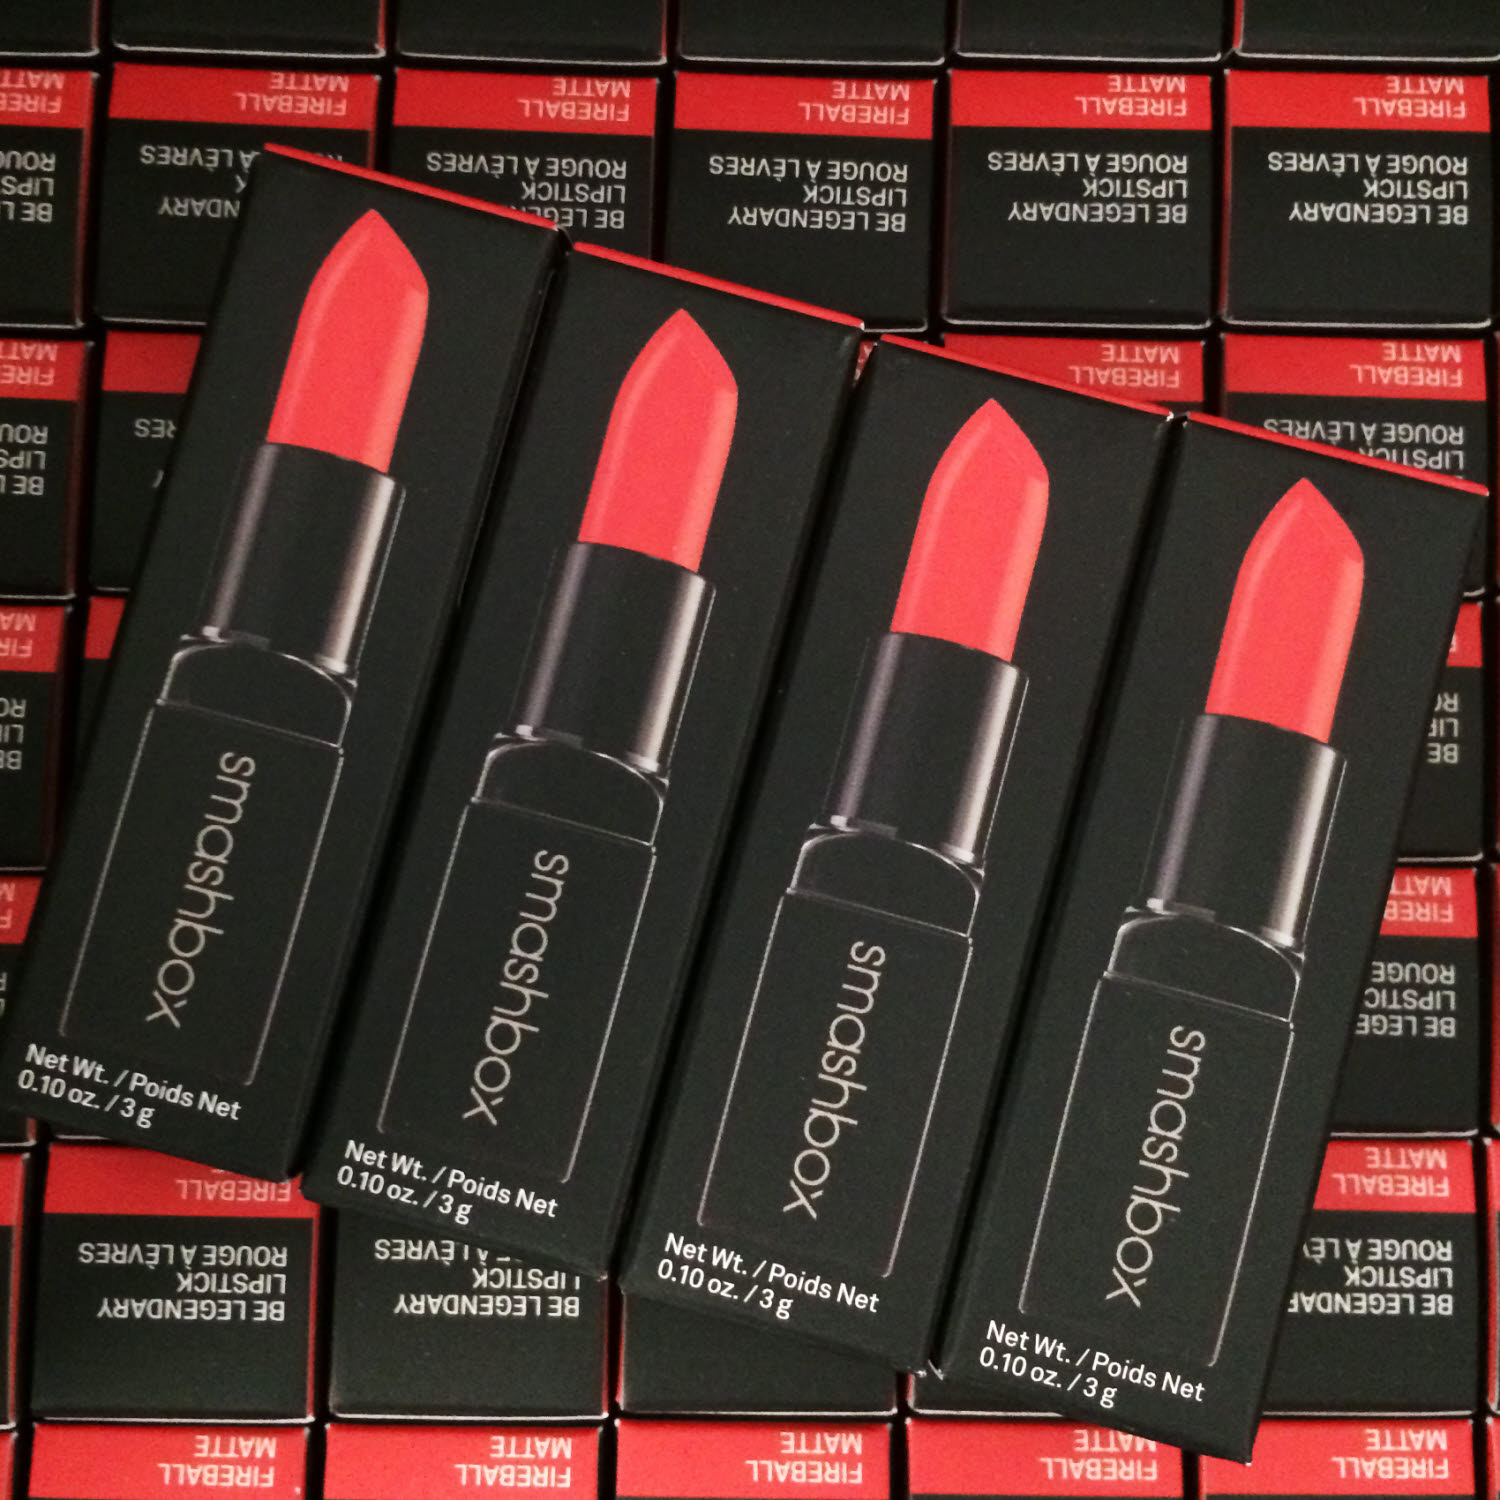 Smashbox Cosmetics red lipstick package